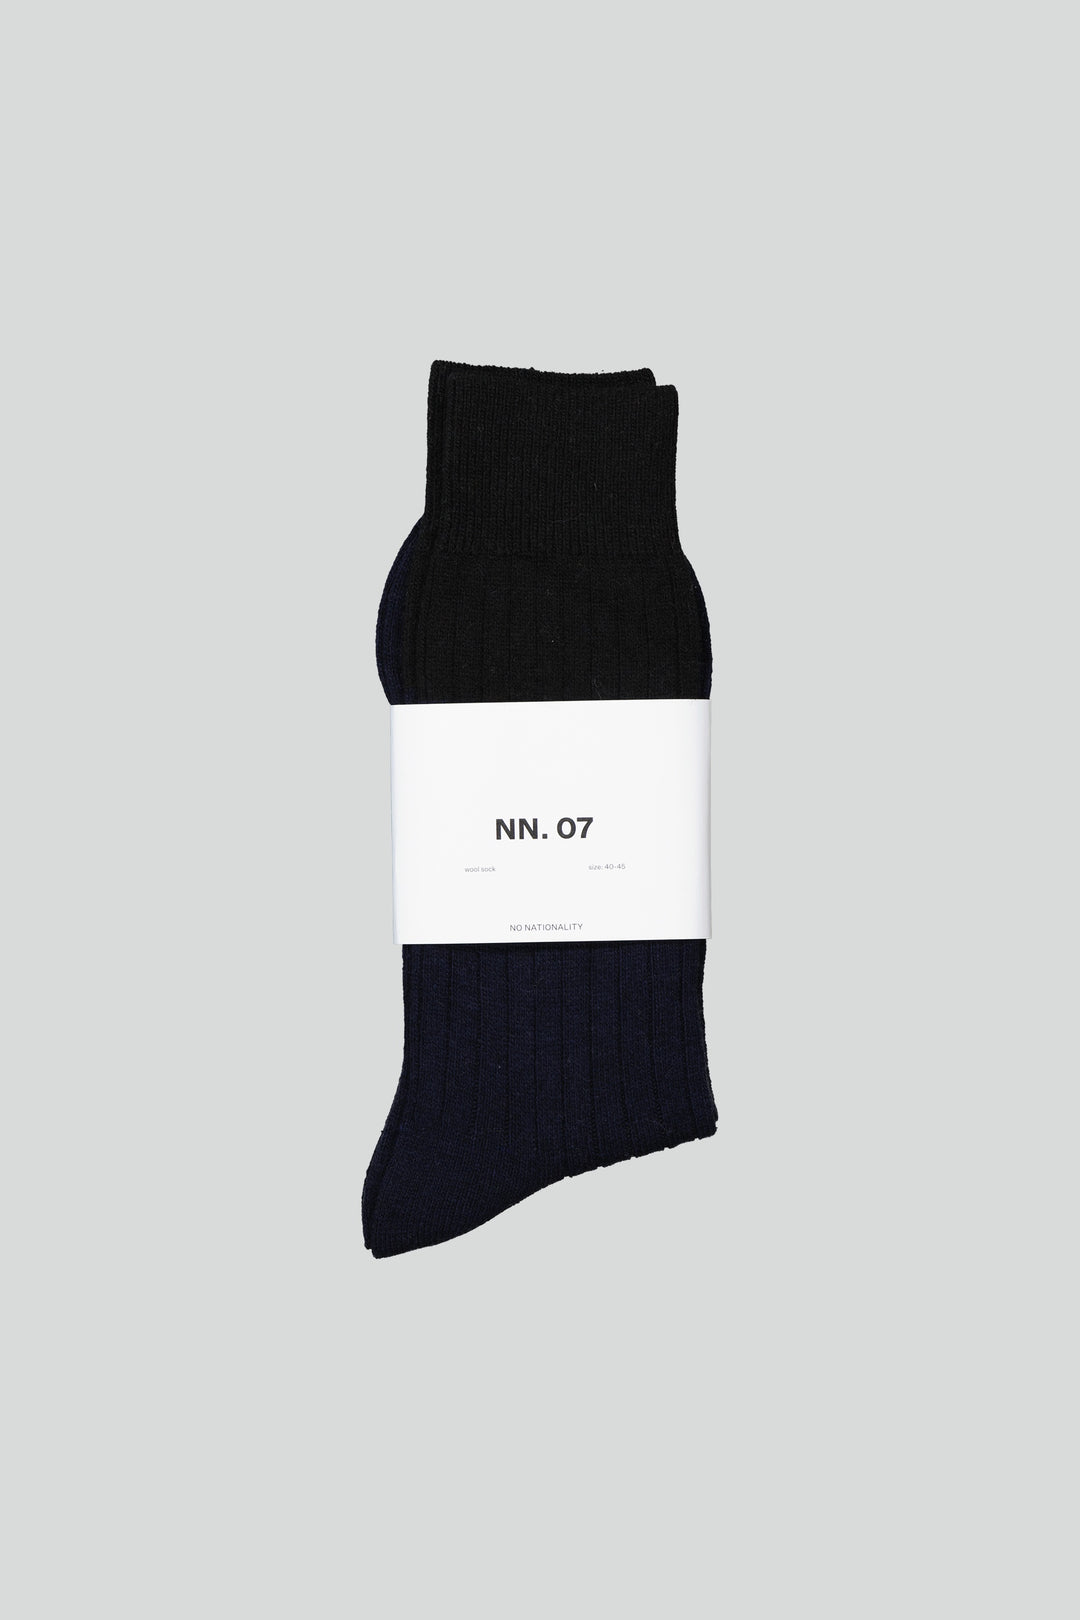 NN07 Sock Ten 9138 in Navy Blue | Buster McGee